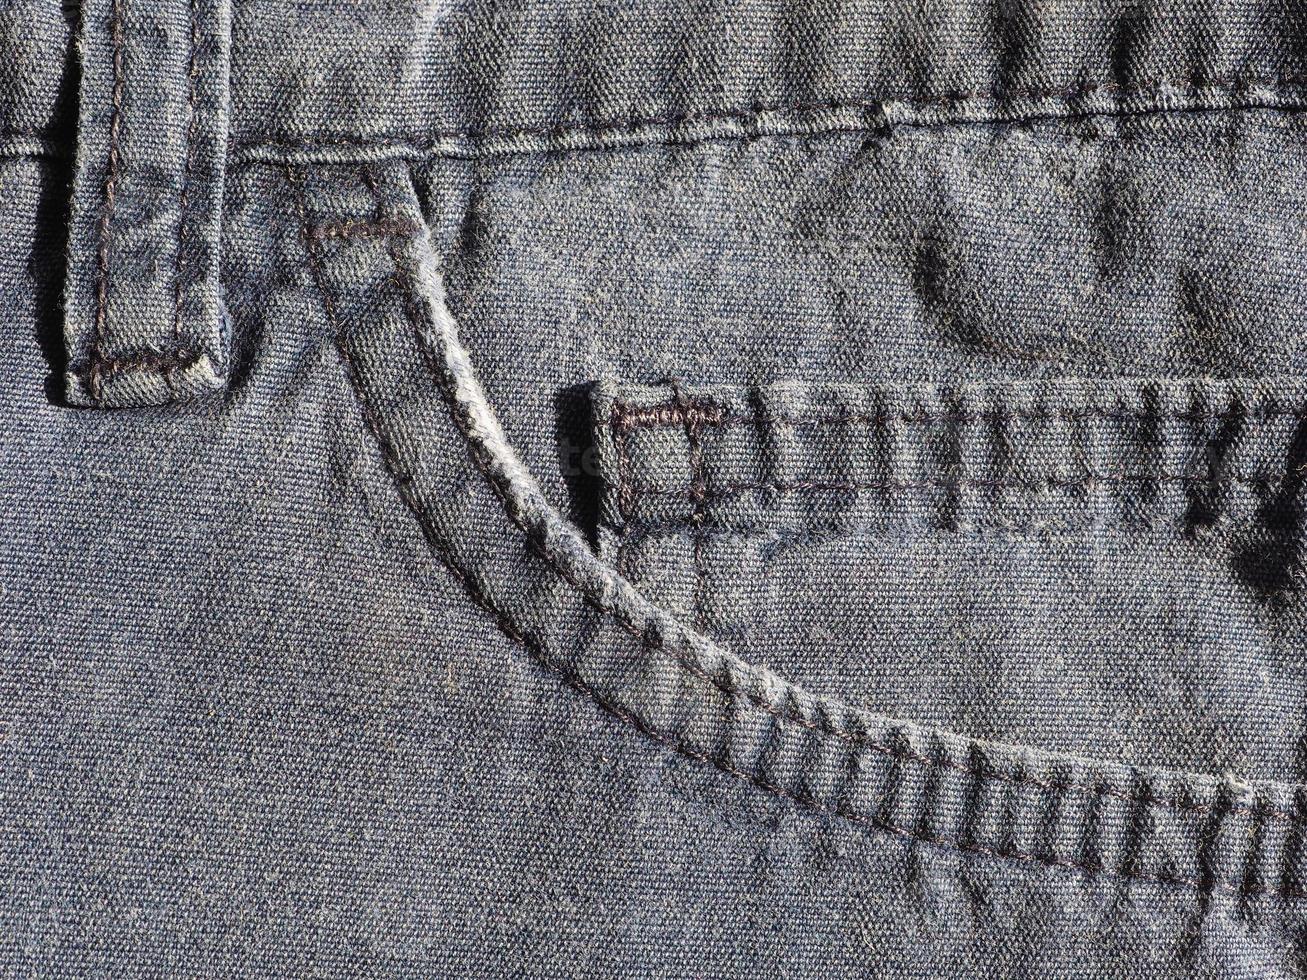 fondo de textura de tela de jeans azul foto